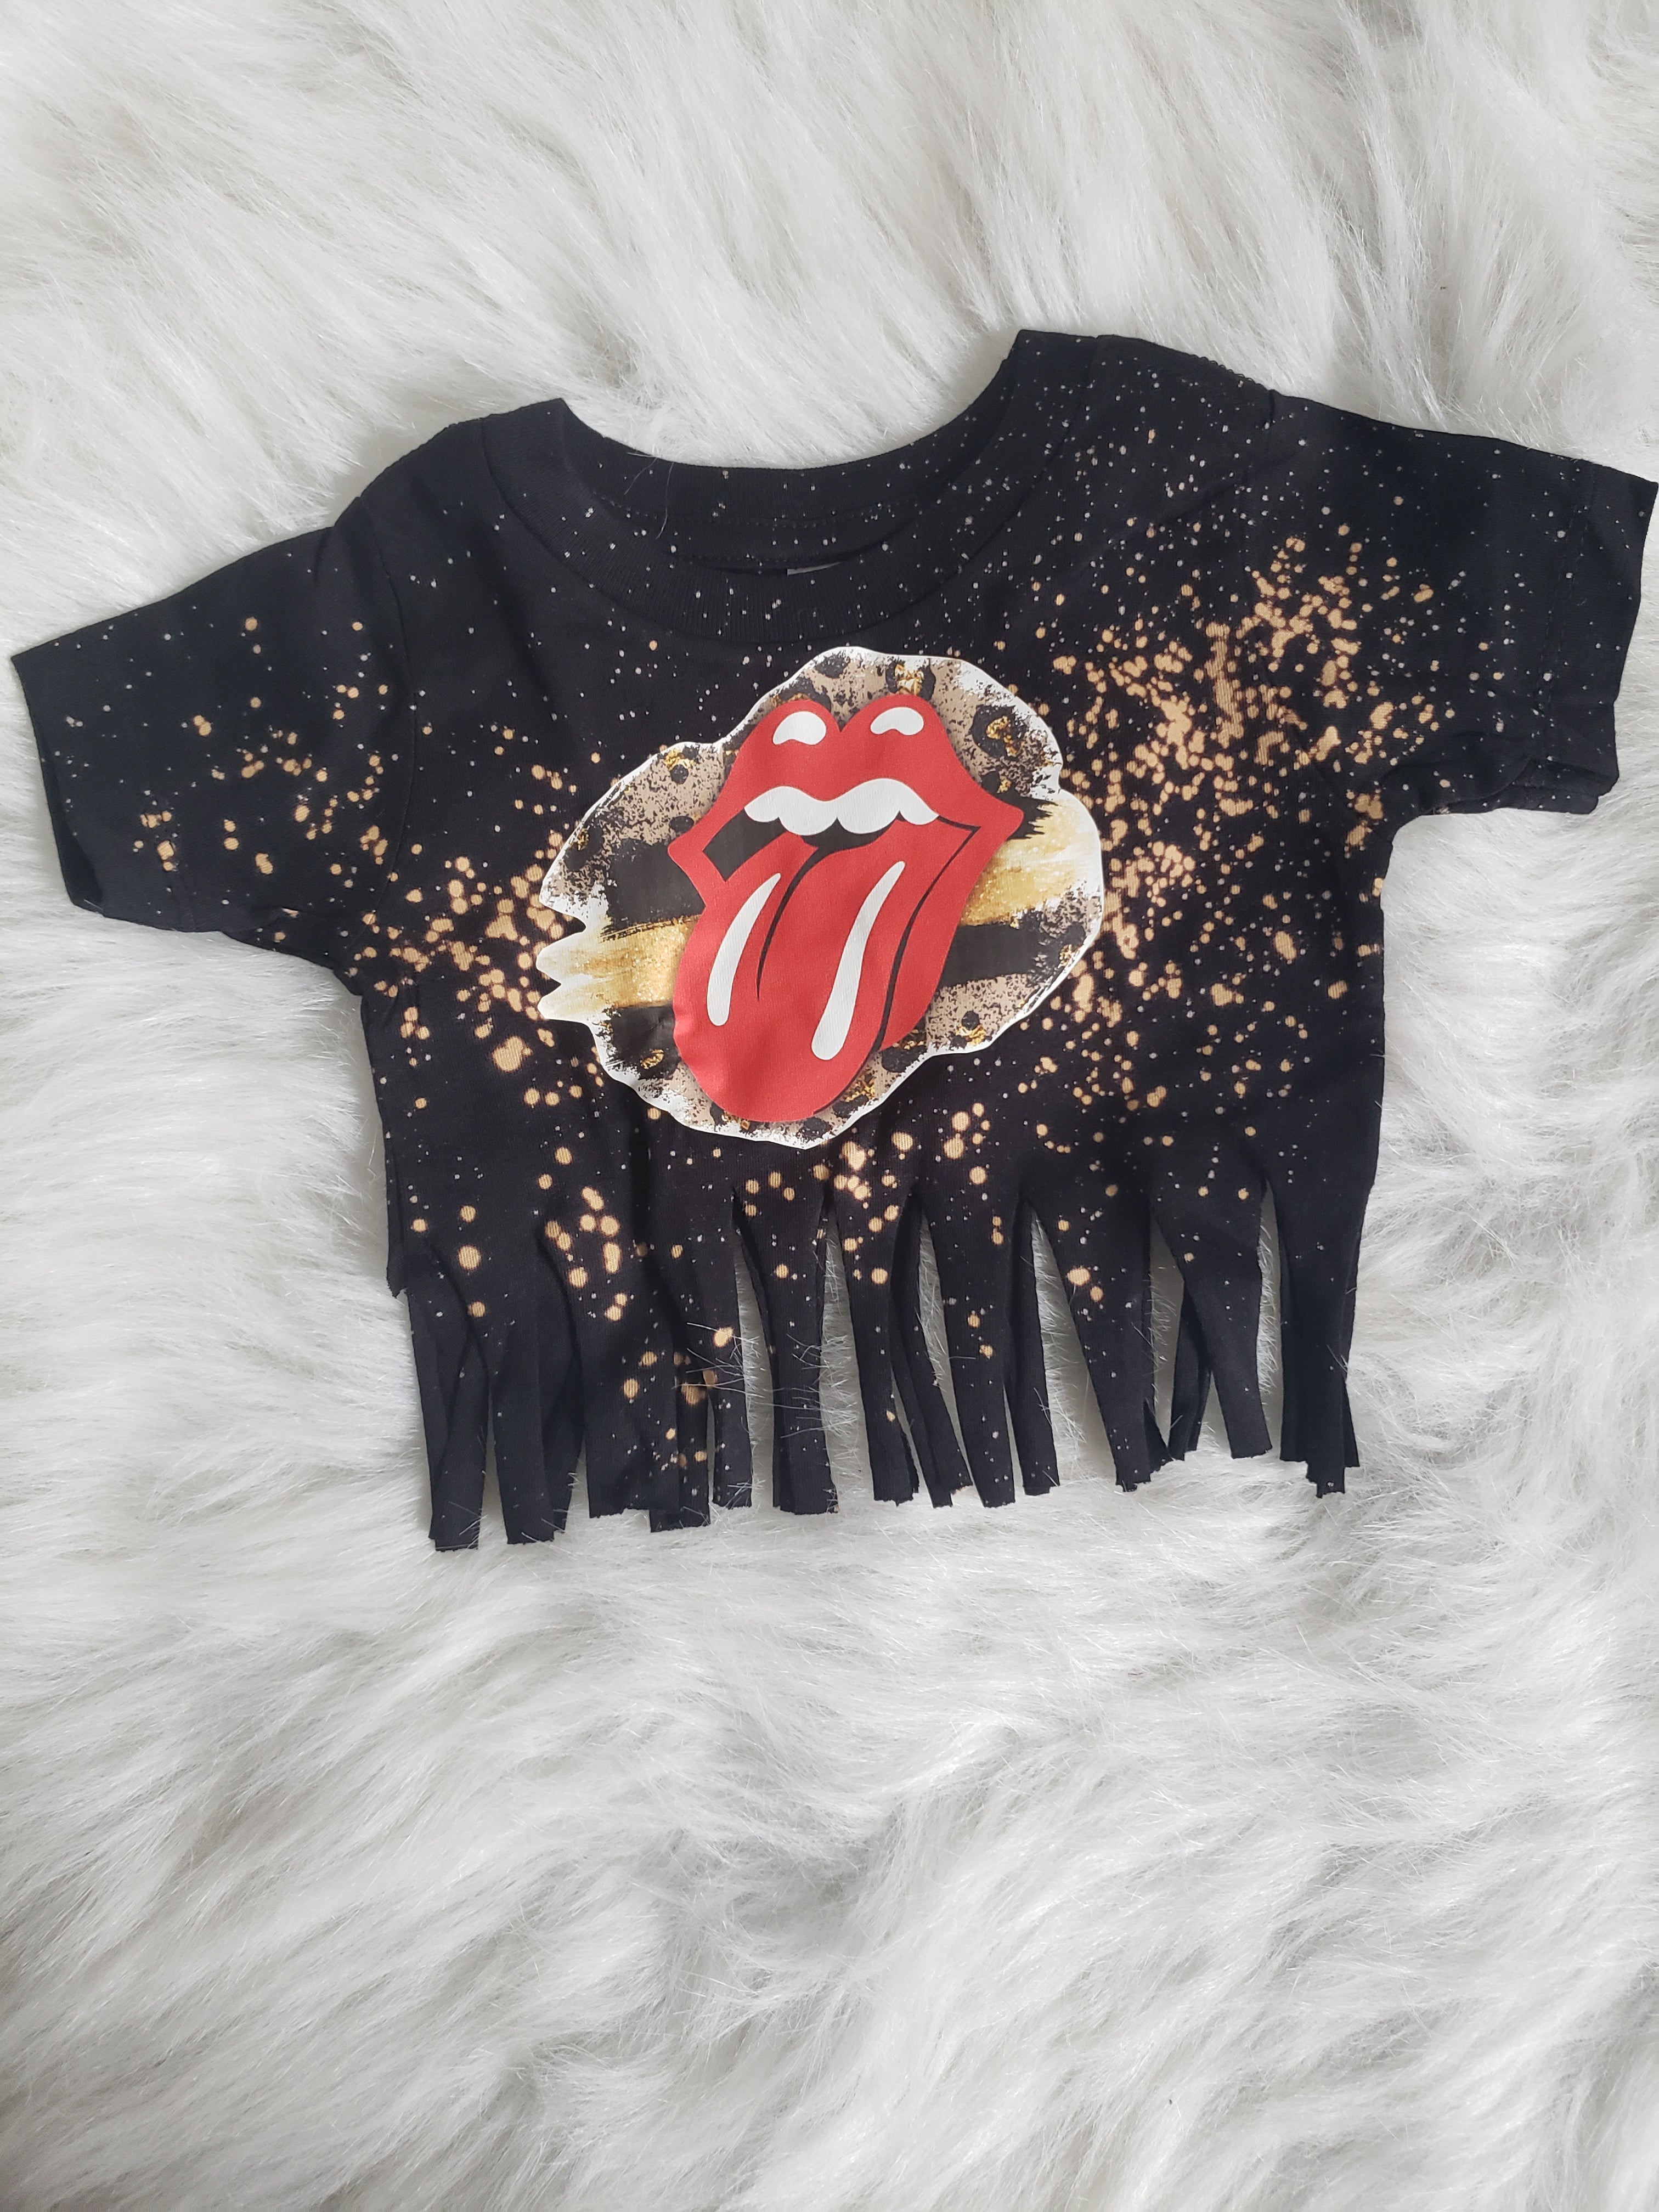 Rolling Stones Tongue Girls Shirt Ladies Shirt